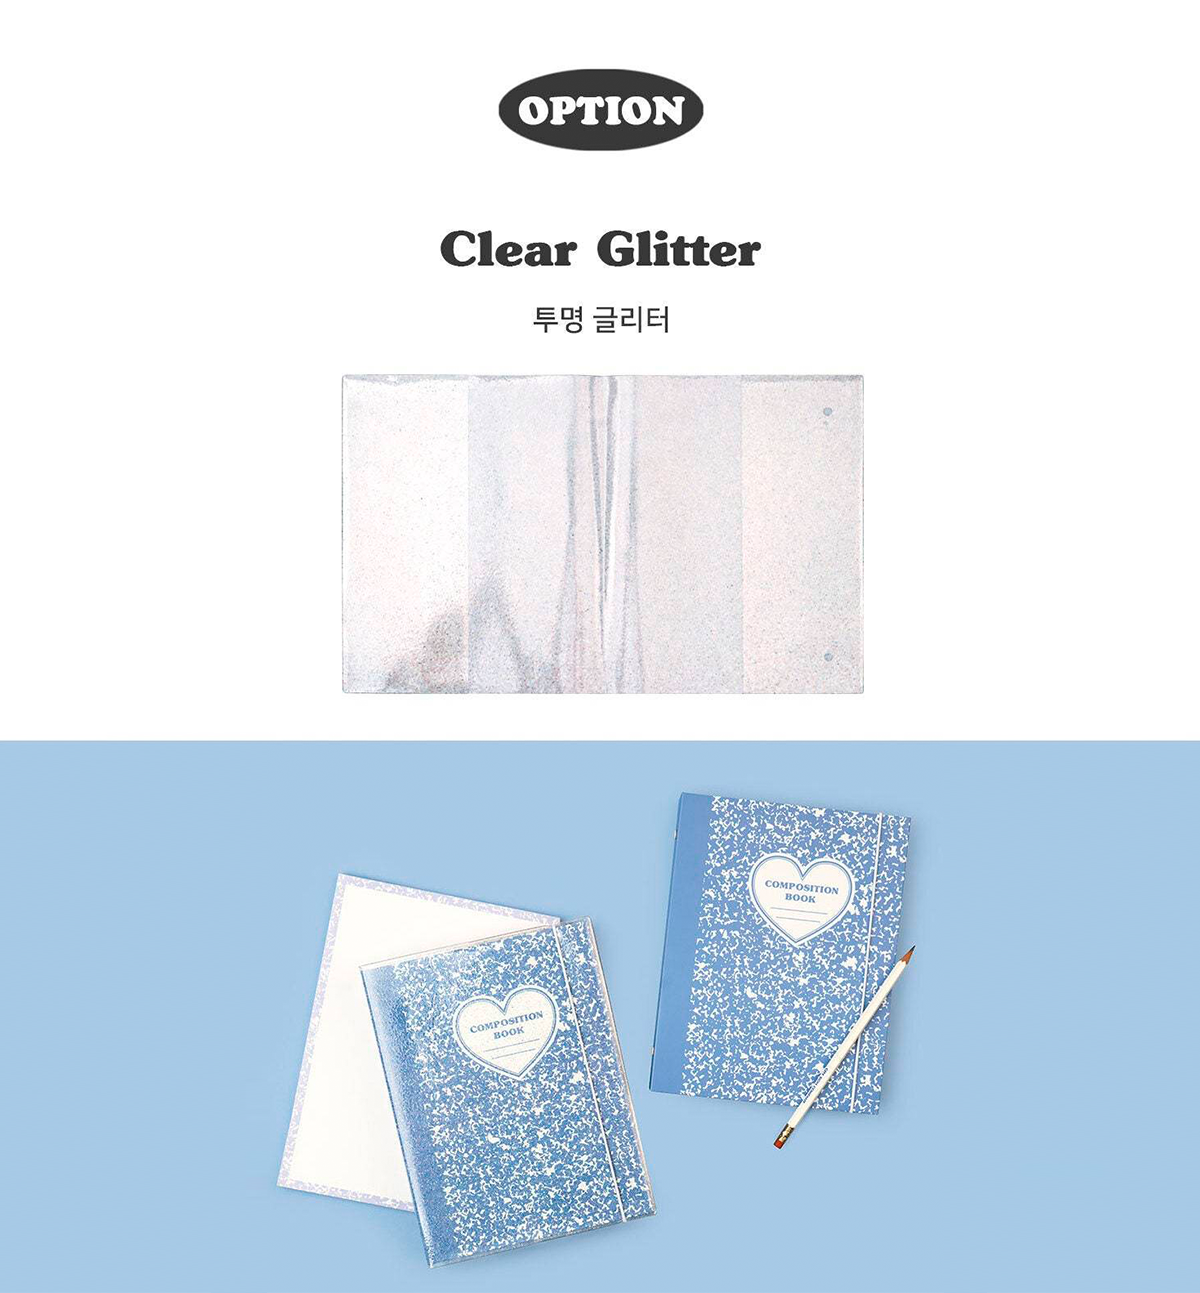 A5 Composition Glitter PVC Cover [R25]